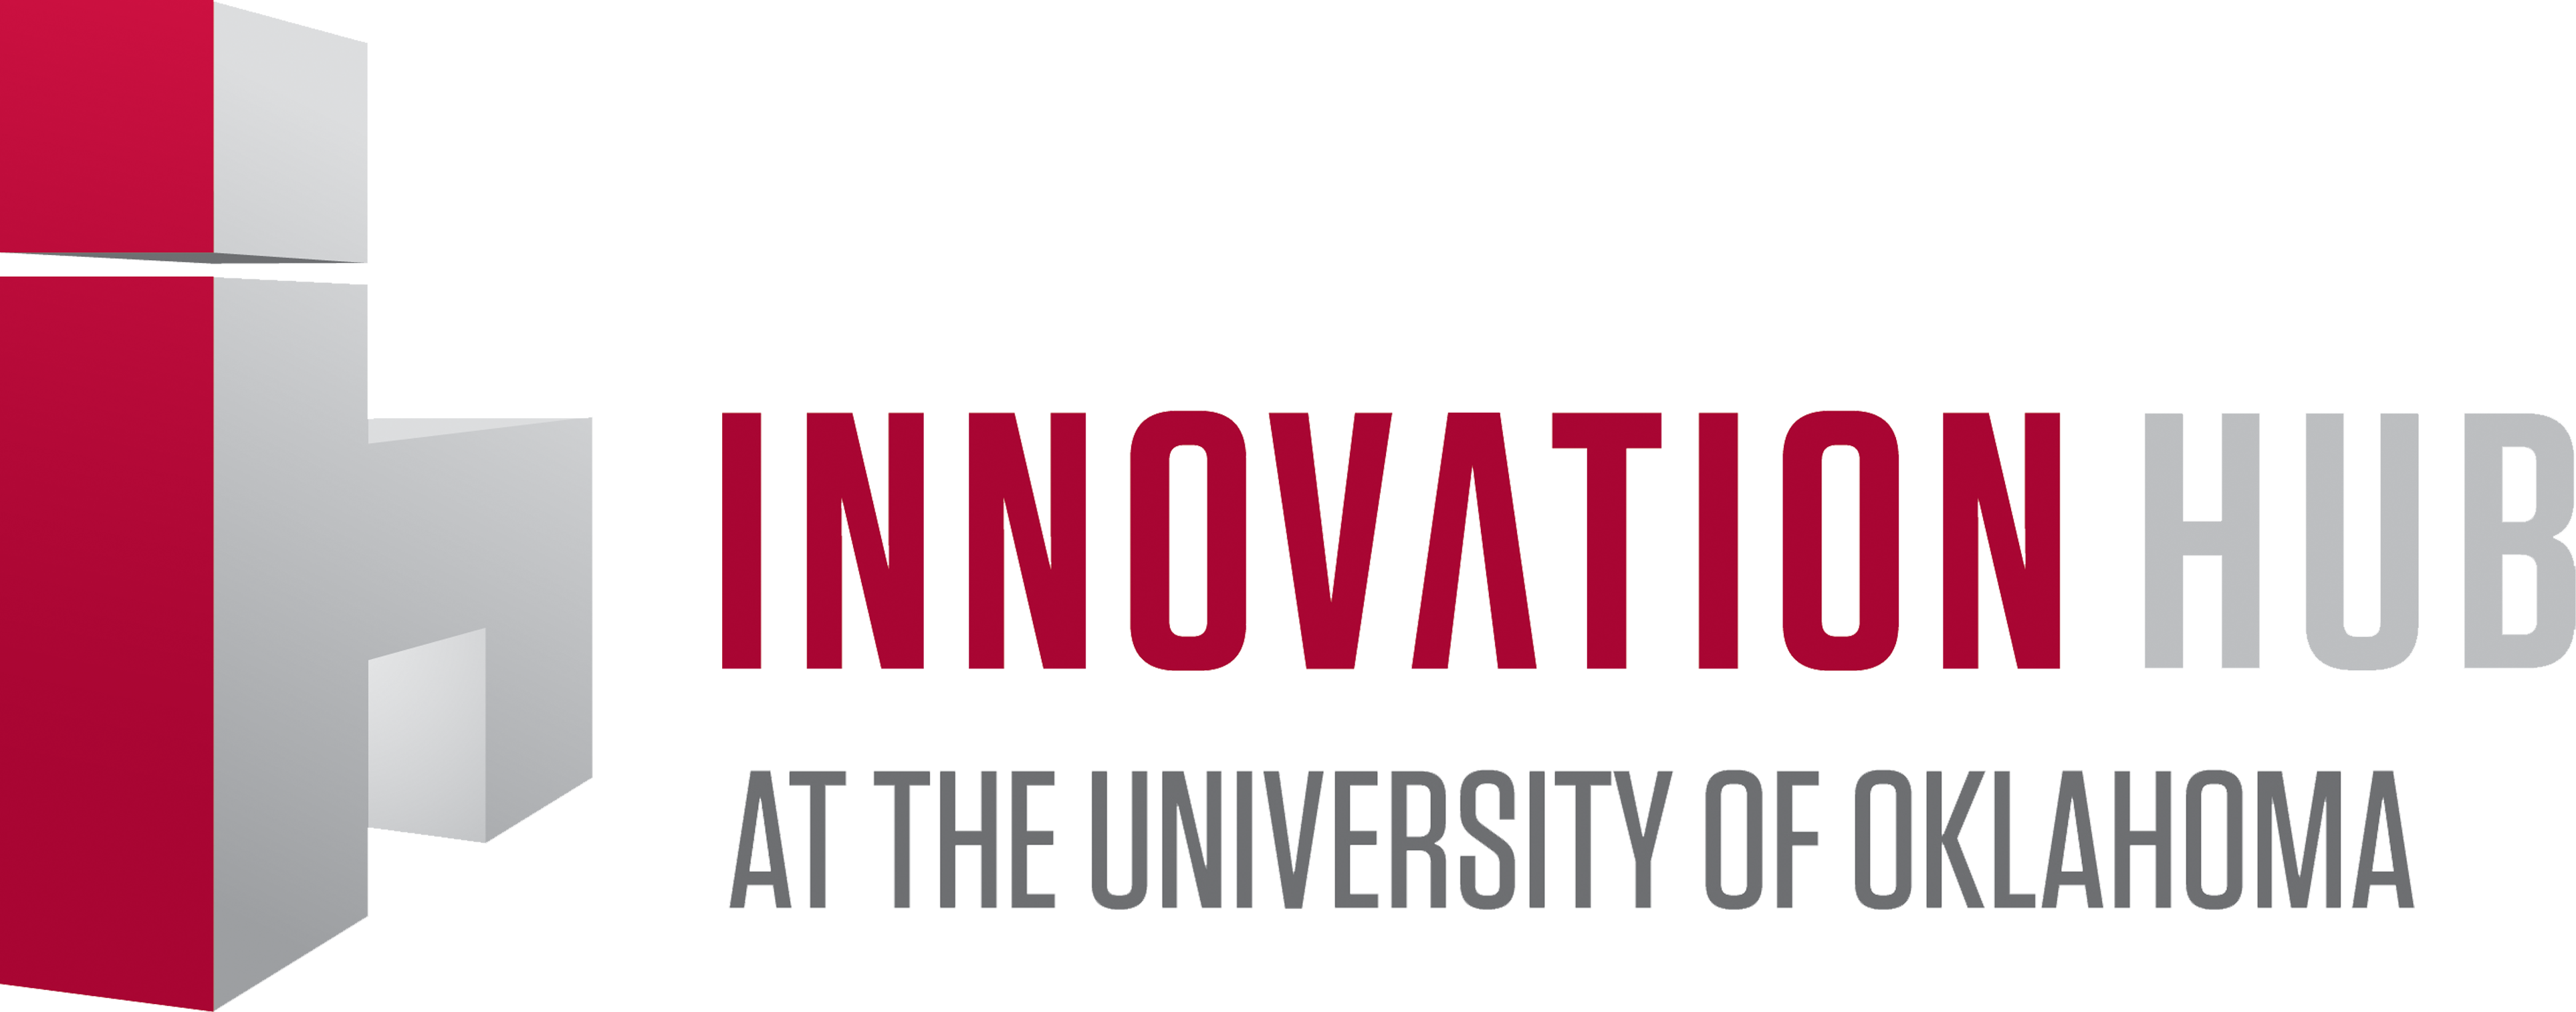 Tom Love Innovation Hub - The University of Oklahoma